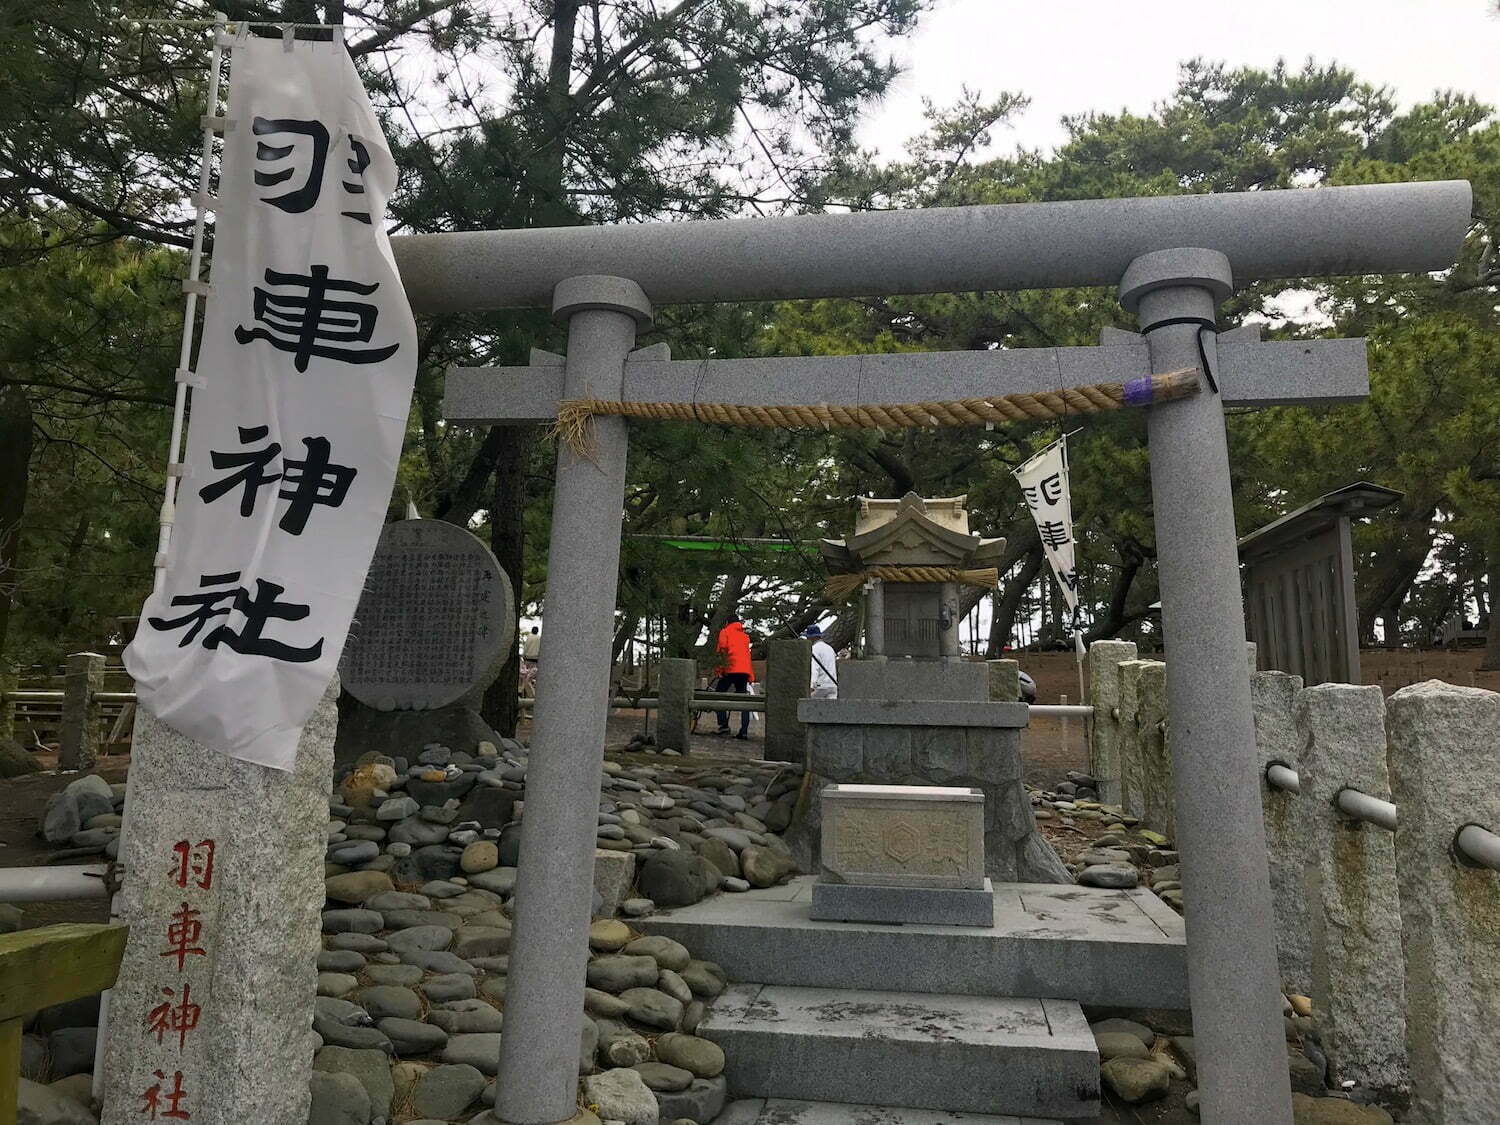 Haguruma shrine